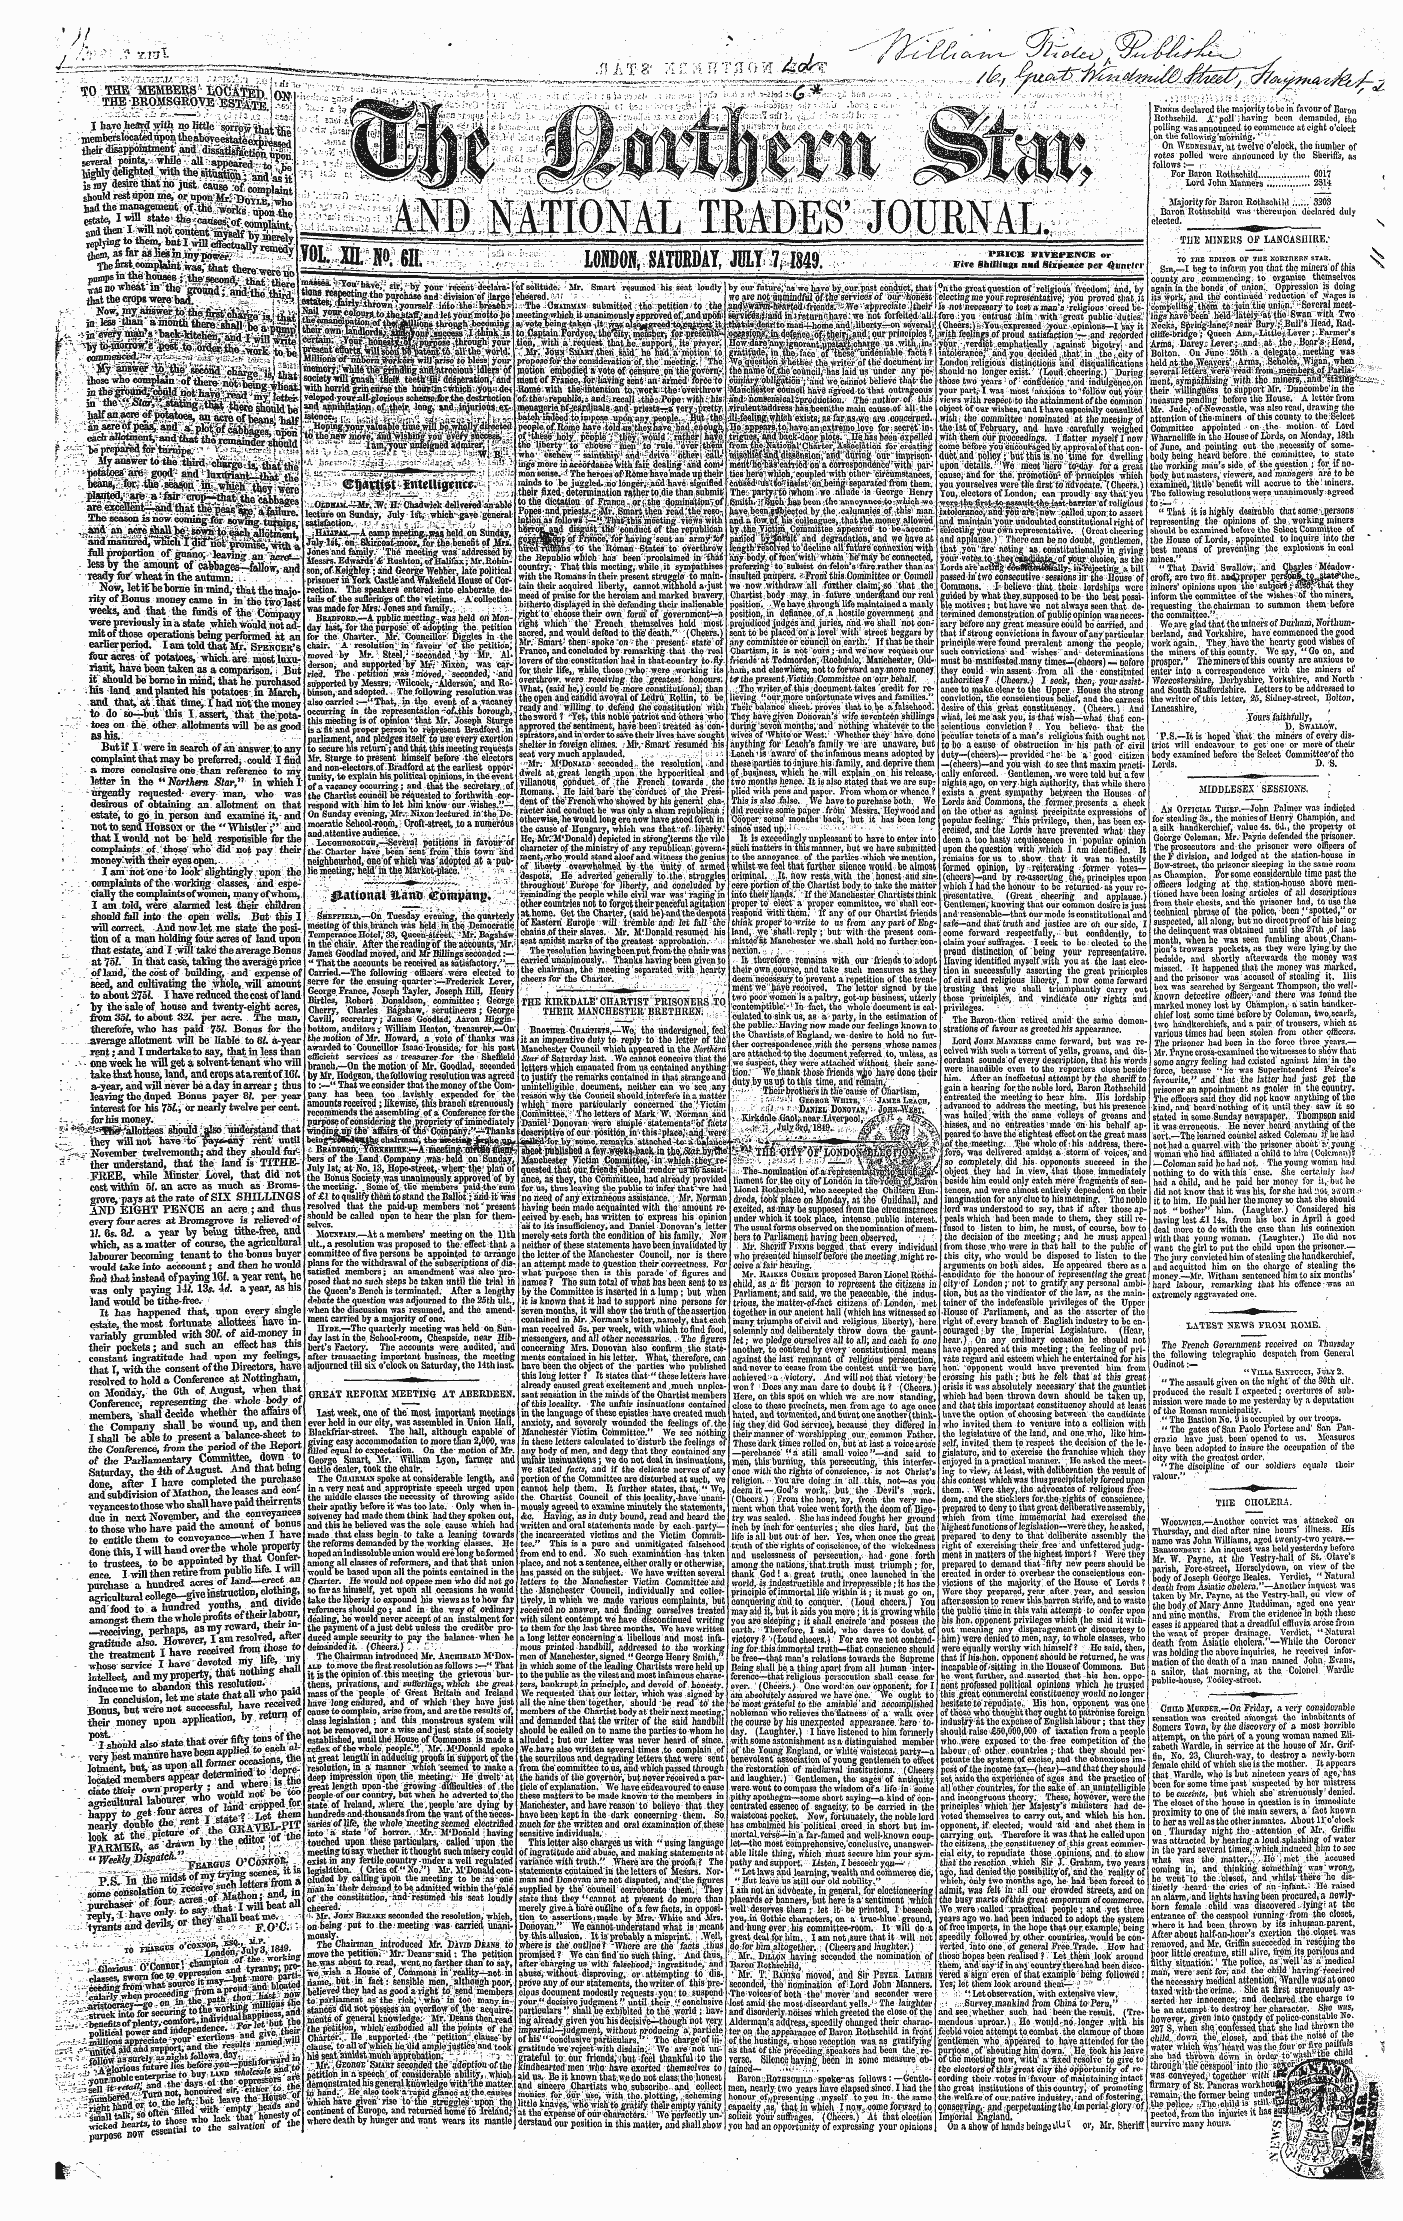 Northern Star (1837-1852): jS F Y, 3rd edition - 50 Ot^Memife^ Ilfisa^ Cm :: The "Blmsgrp^E^^G^ Tg.